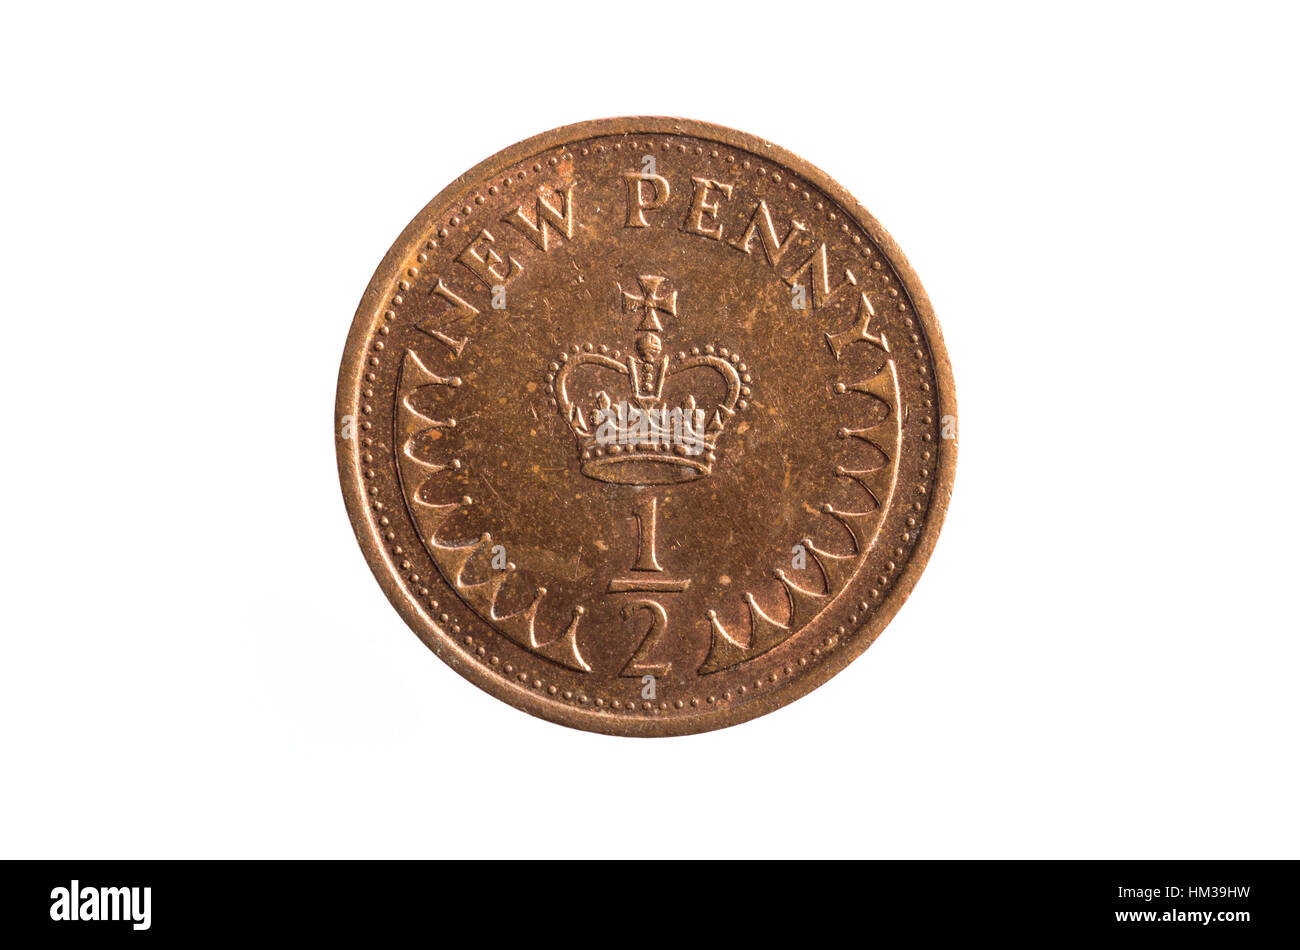 A British half penny coin Stock Photo